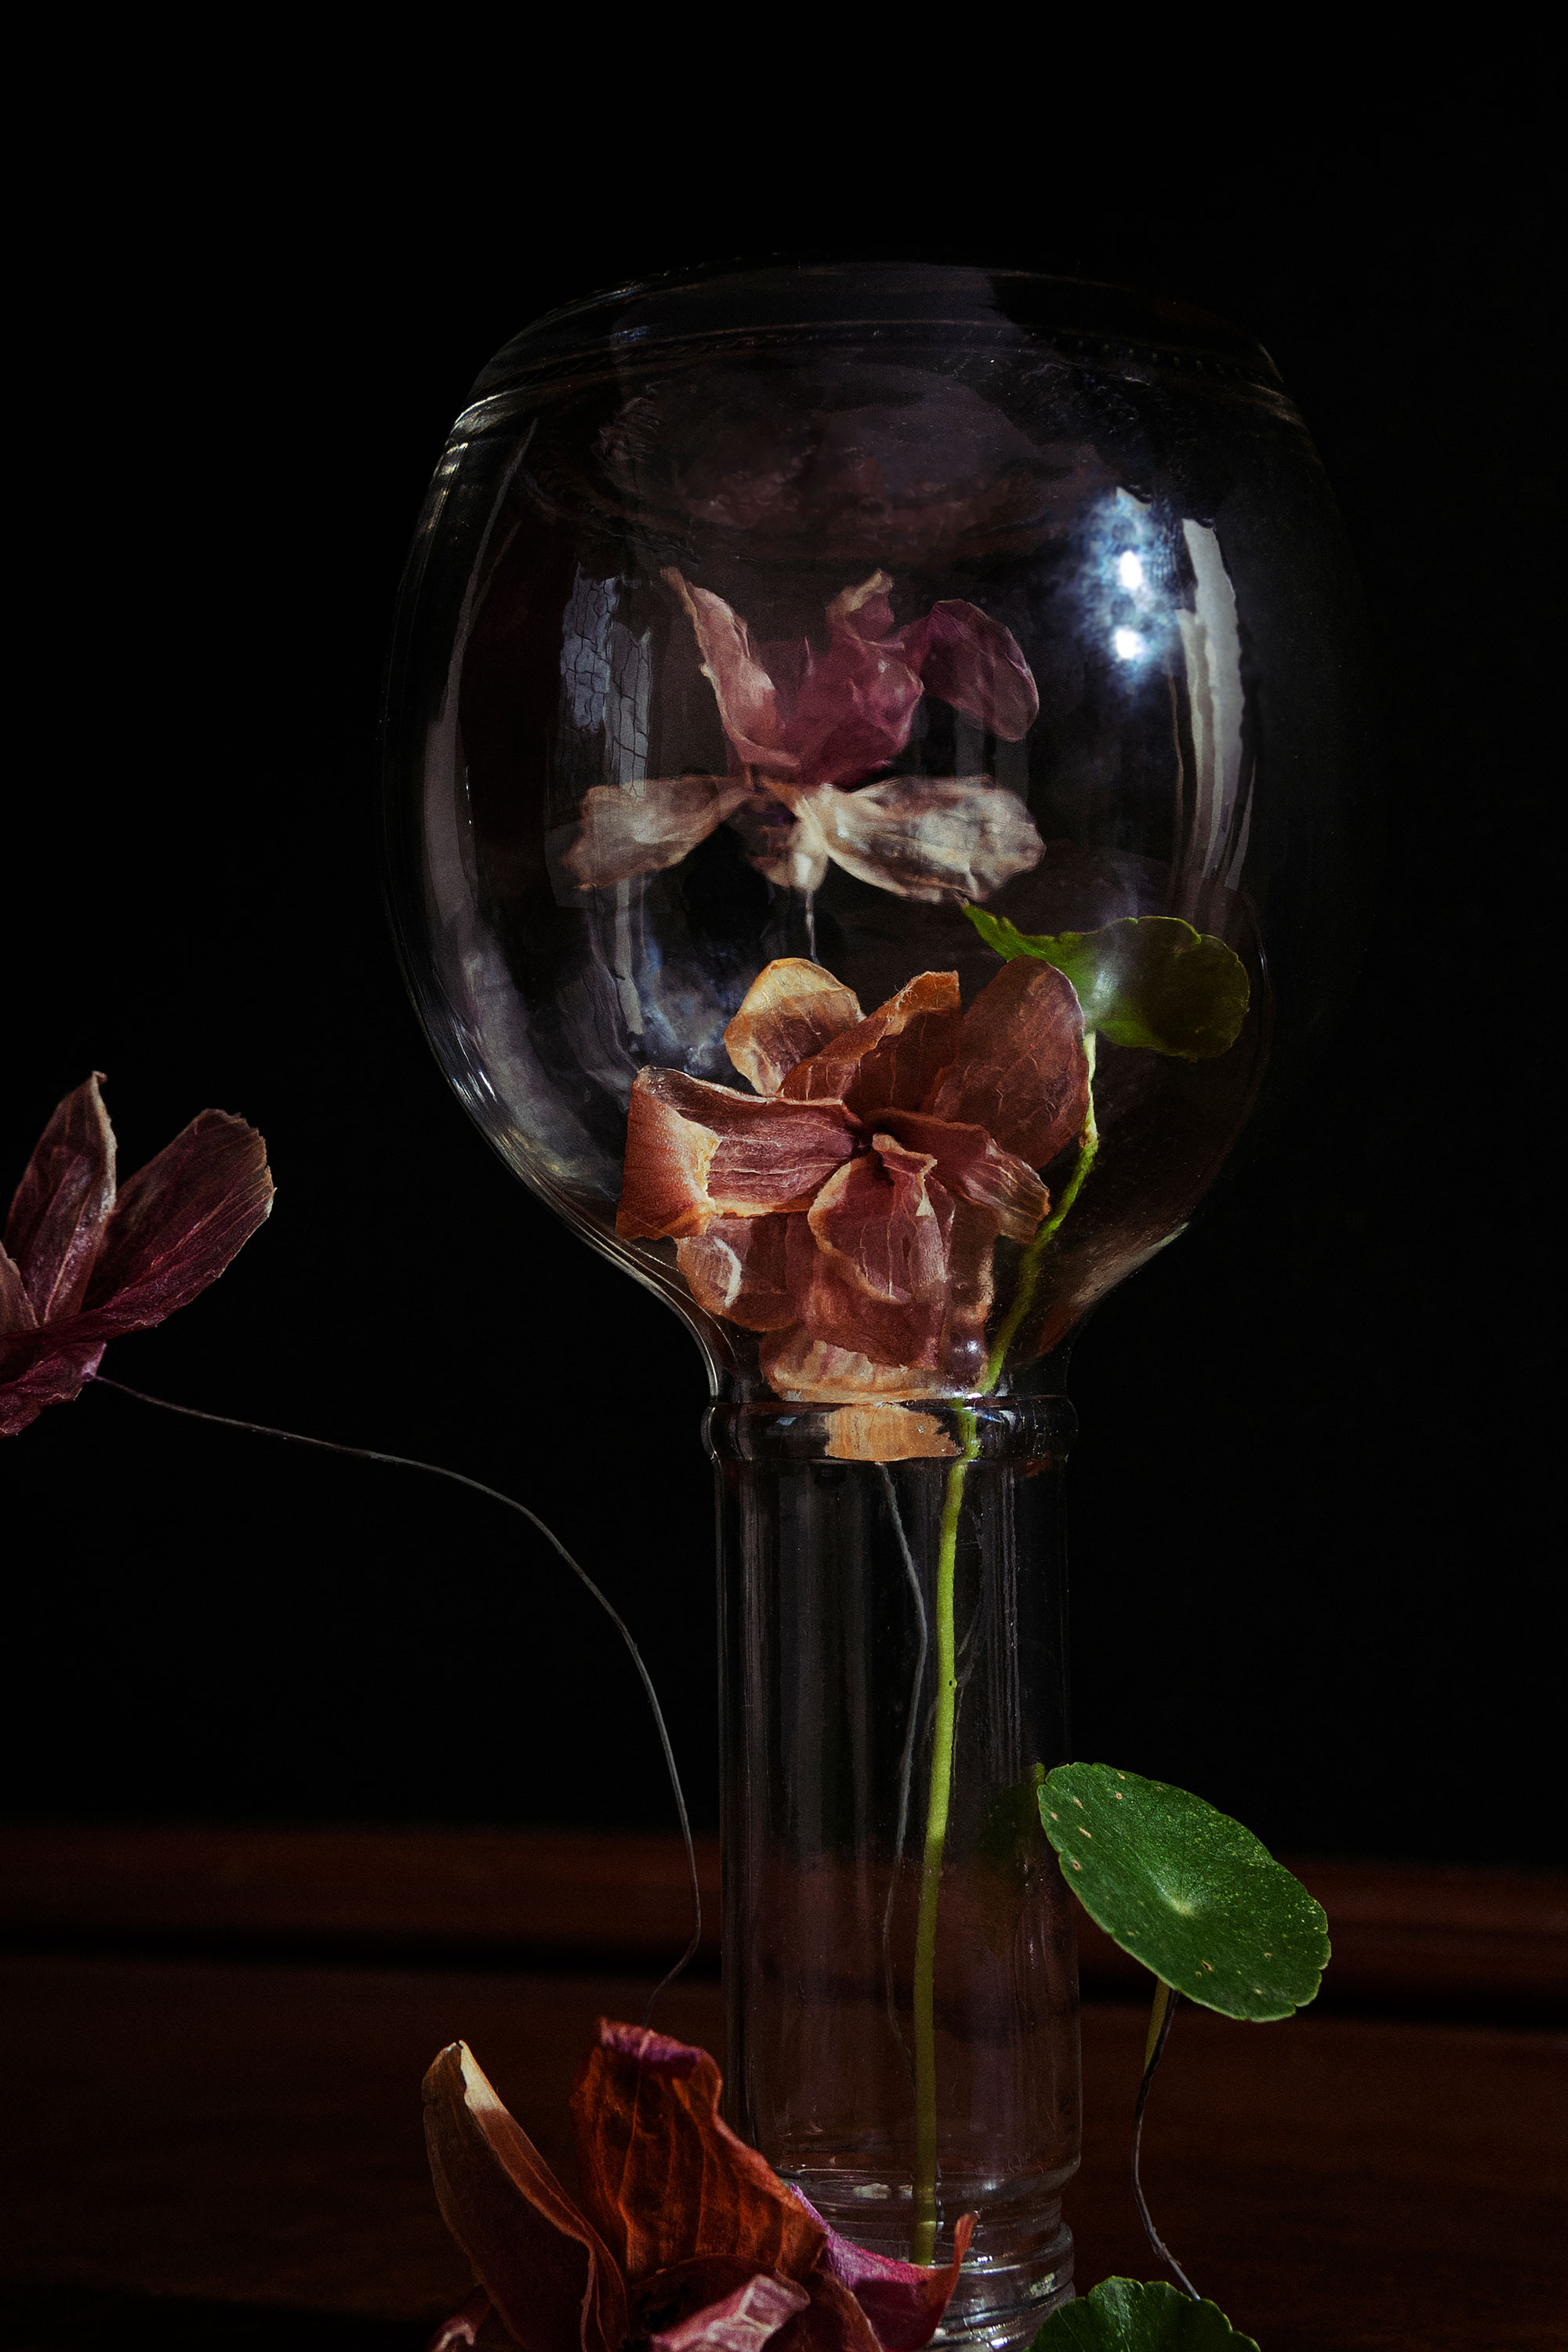 Eat my Smelly Flowers: A Still Life (2021) by Subashri Sankarasubramanian